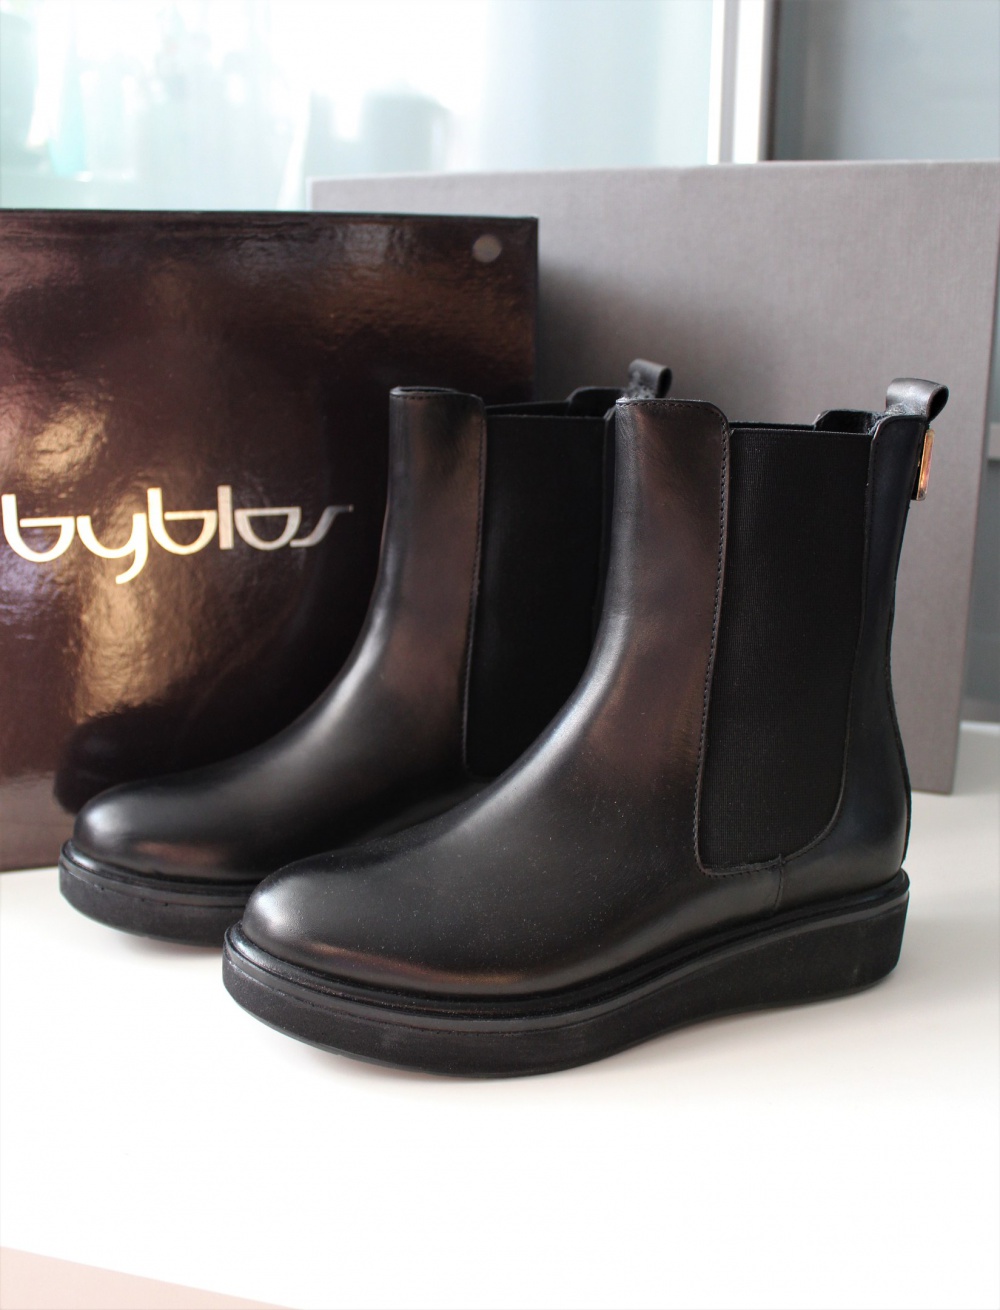 Ботинки Byblos размер 36